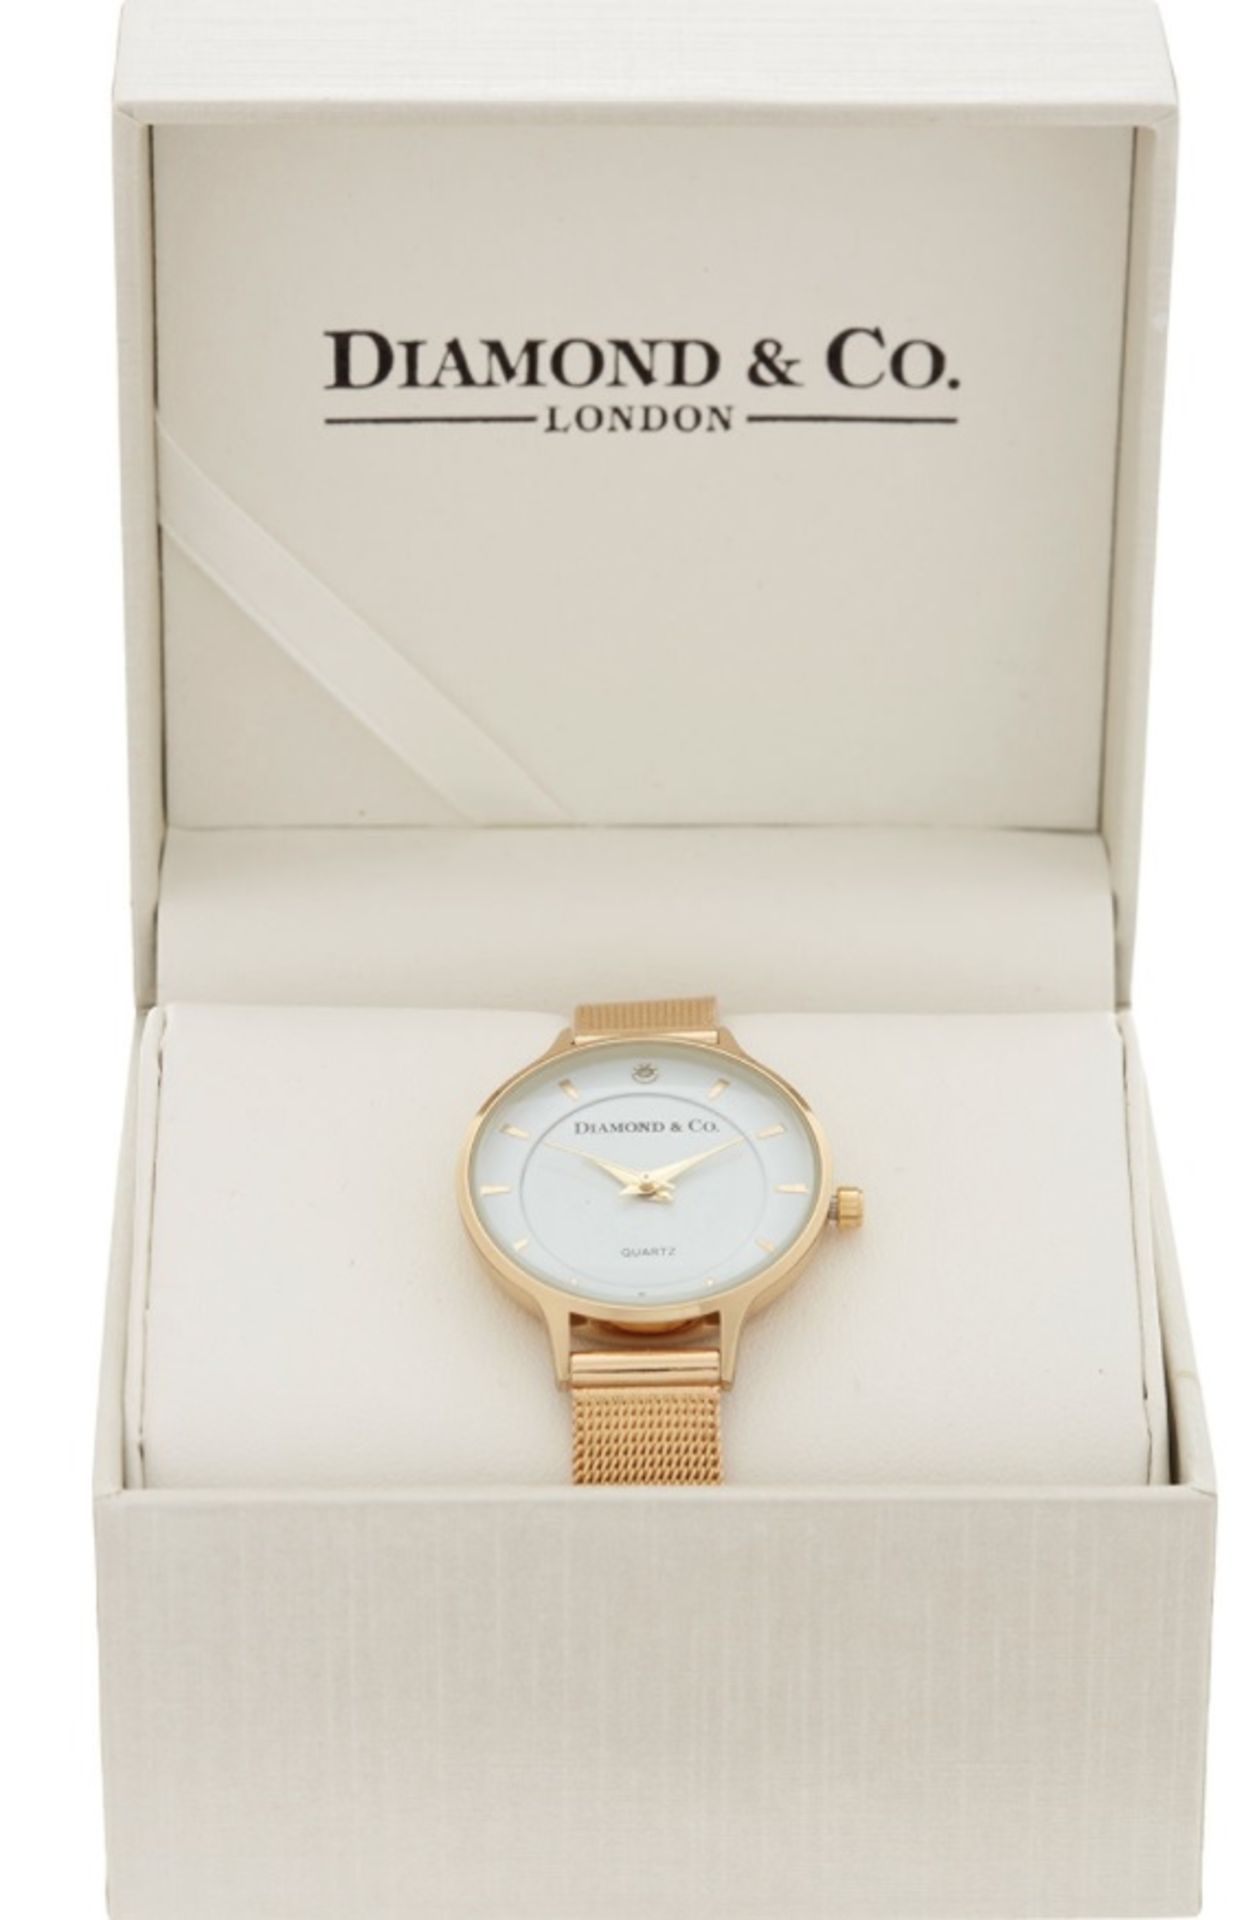 V Brand New Diamond & Co London Ladies Bracelet Watch - Silver